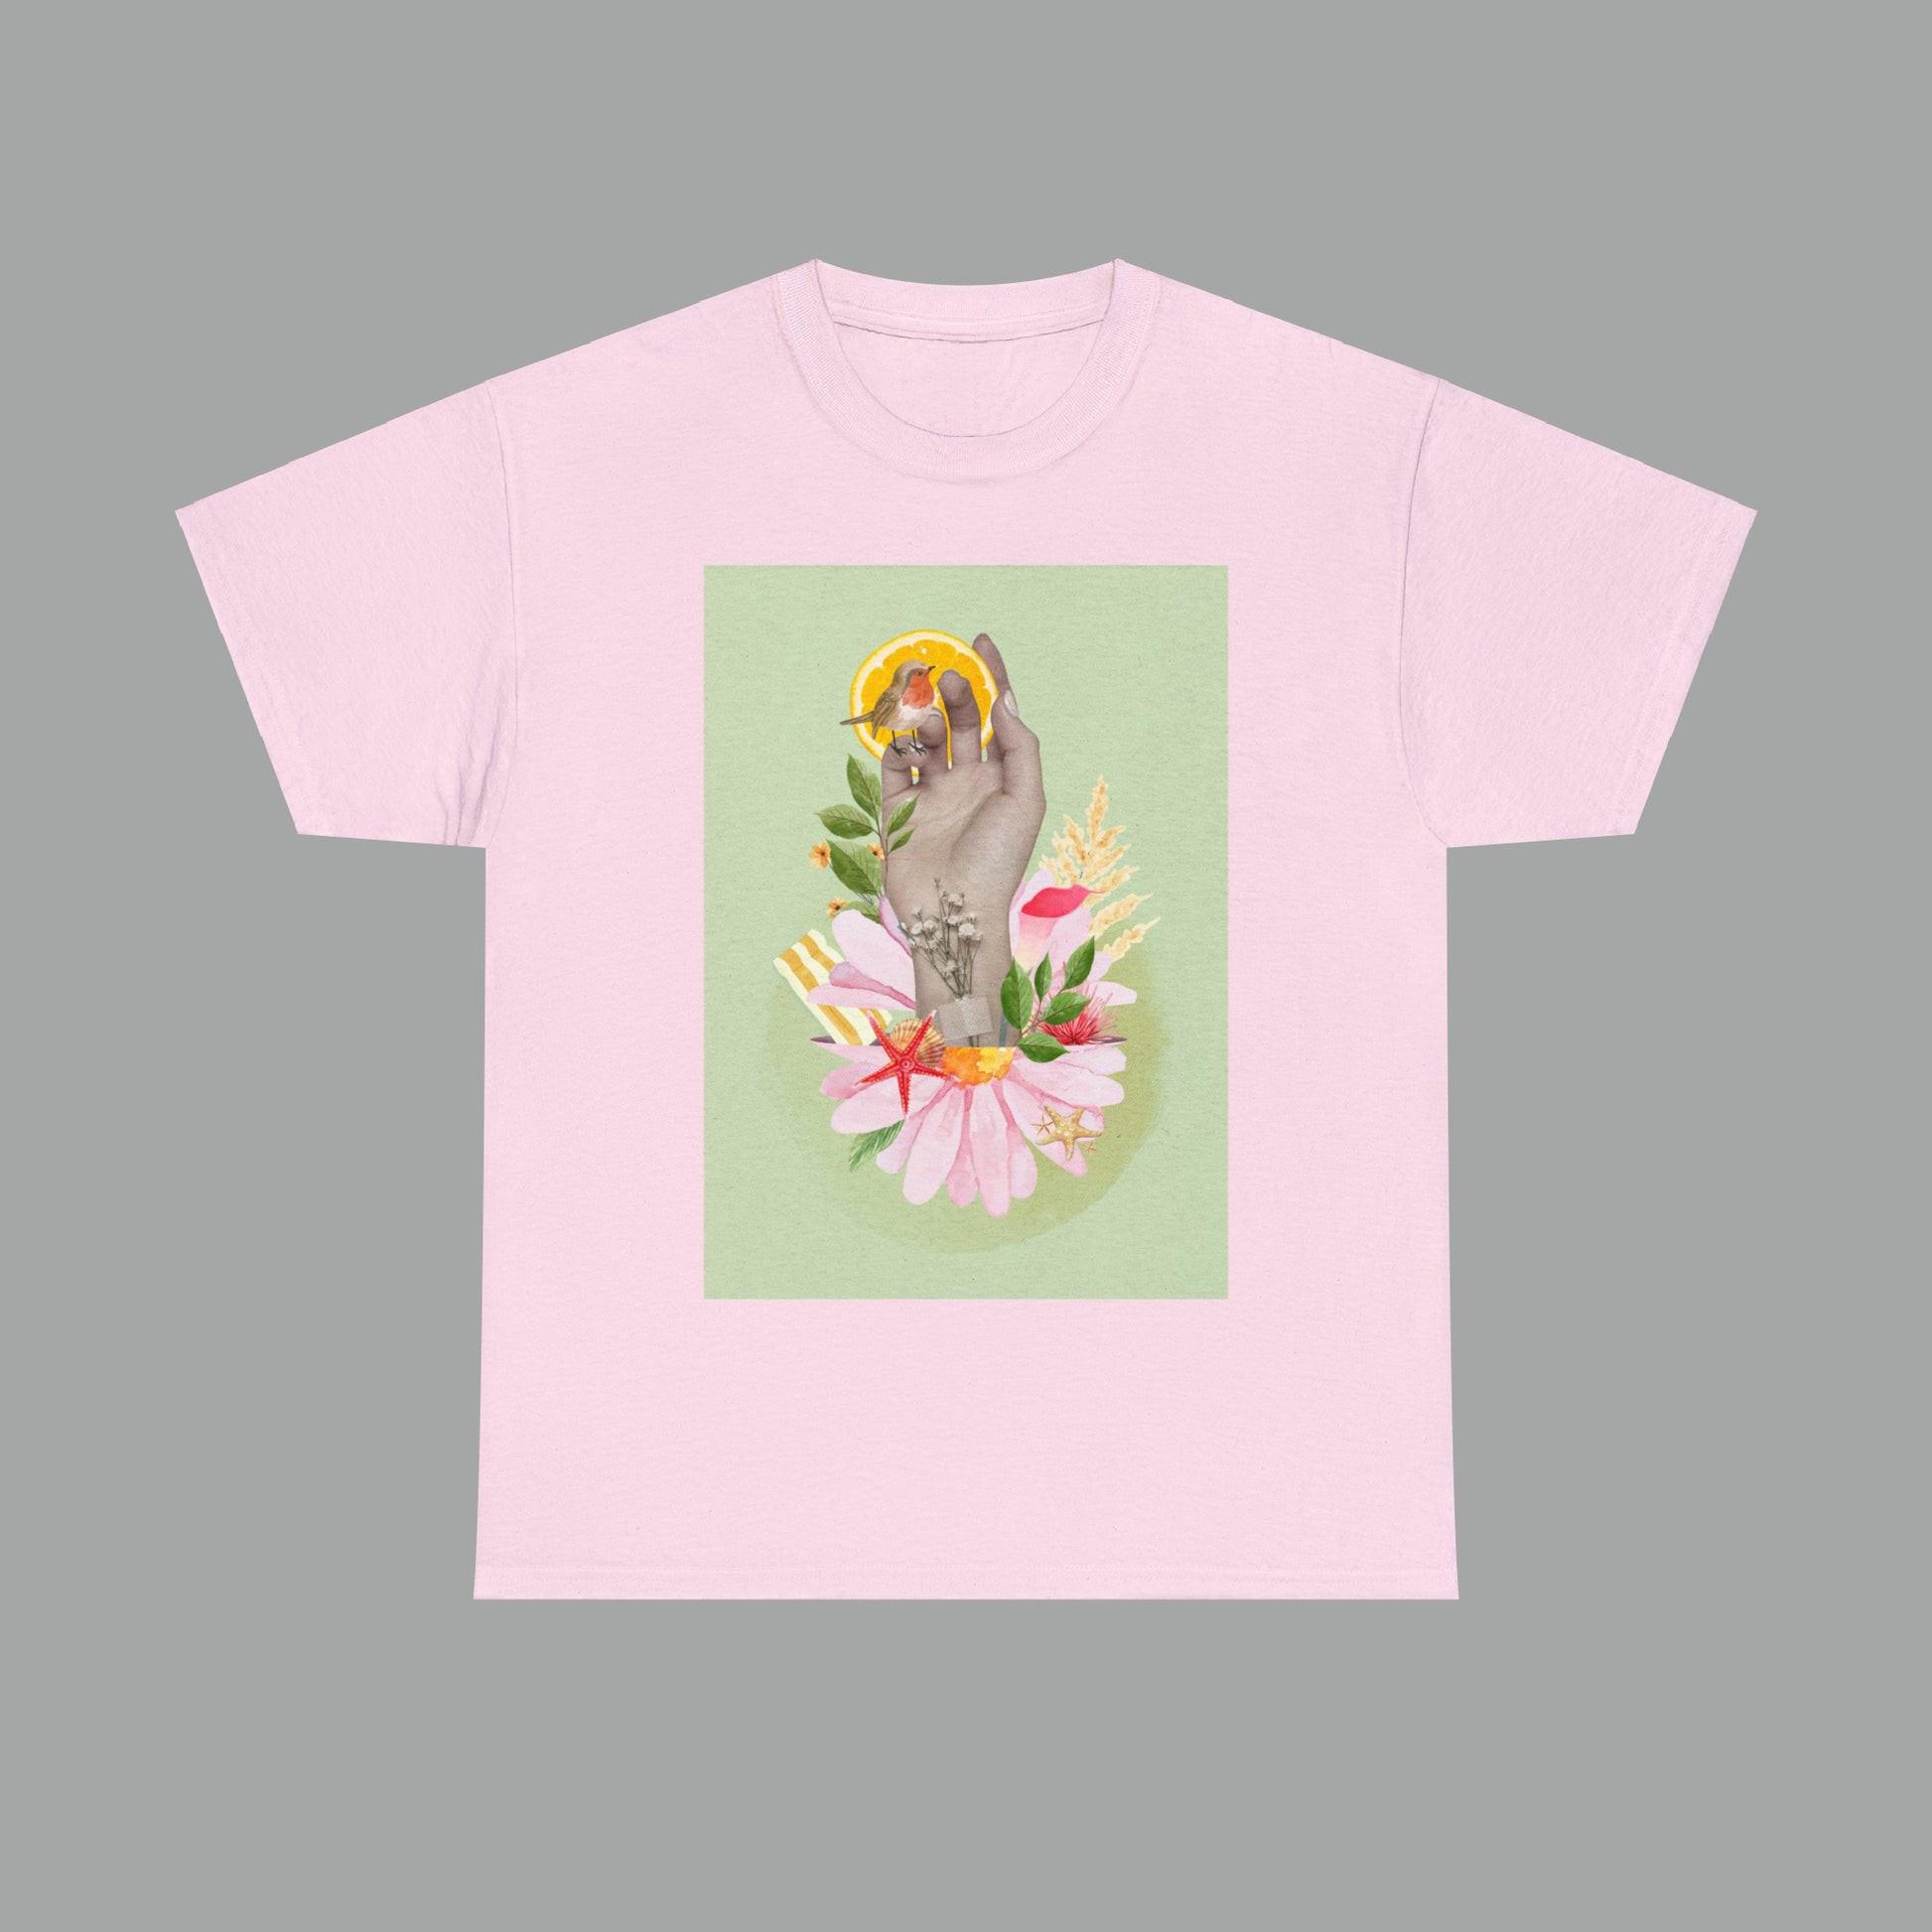 Pink cotton graphic t-shirt